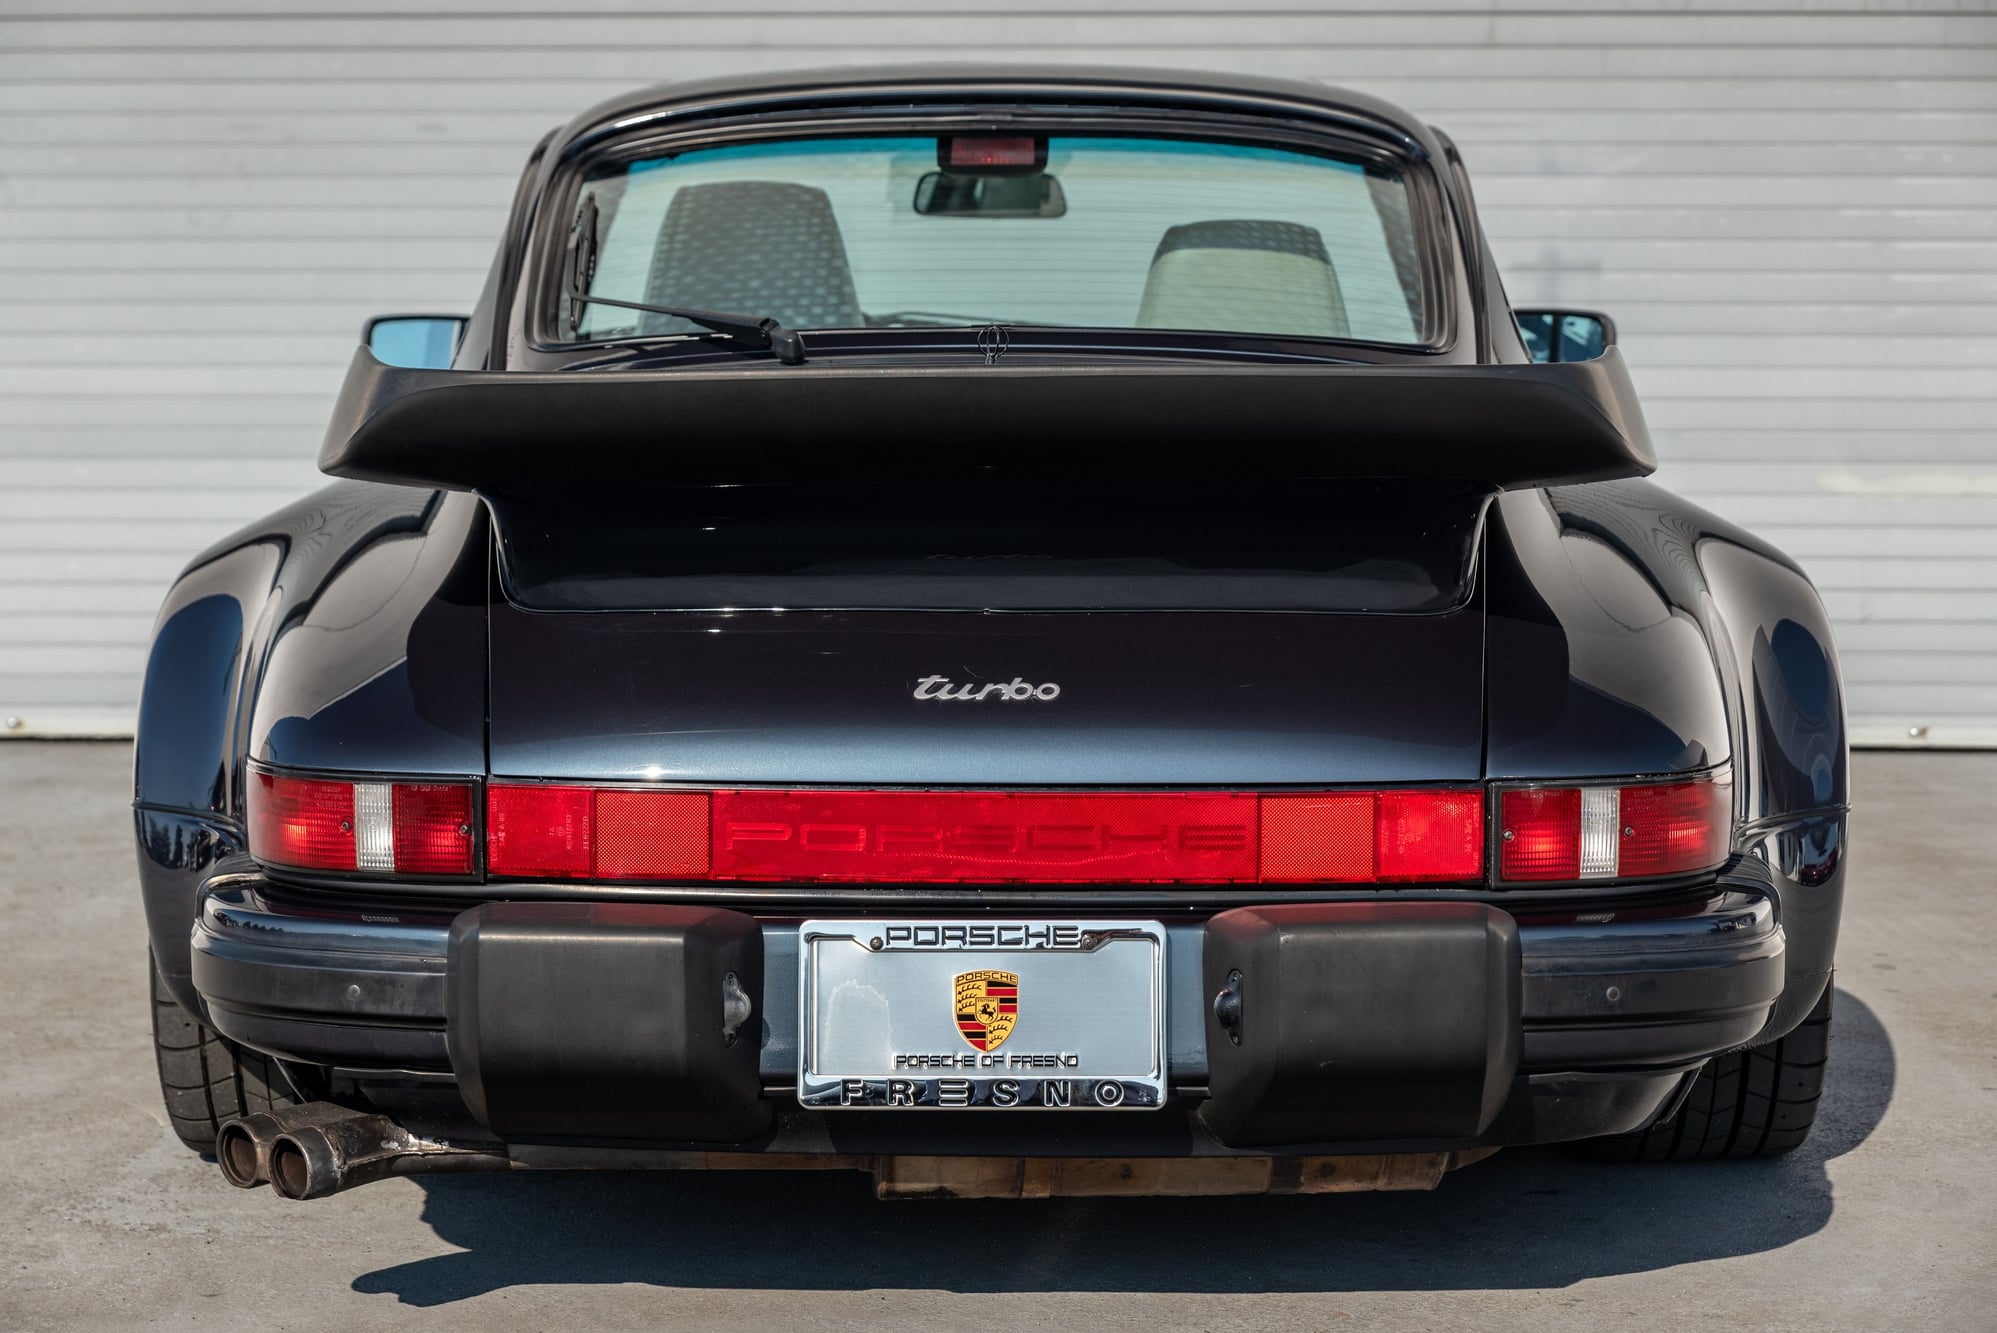 1988 Porsche 911 - Marine Blue Metallic 930 Turbo - Used - VIN WP0JB0932JS050237 - 118,716 Miles - 6 cyl - 2WD - Manual - Coupe - Blue - Fresno, CA 93650, United States